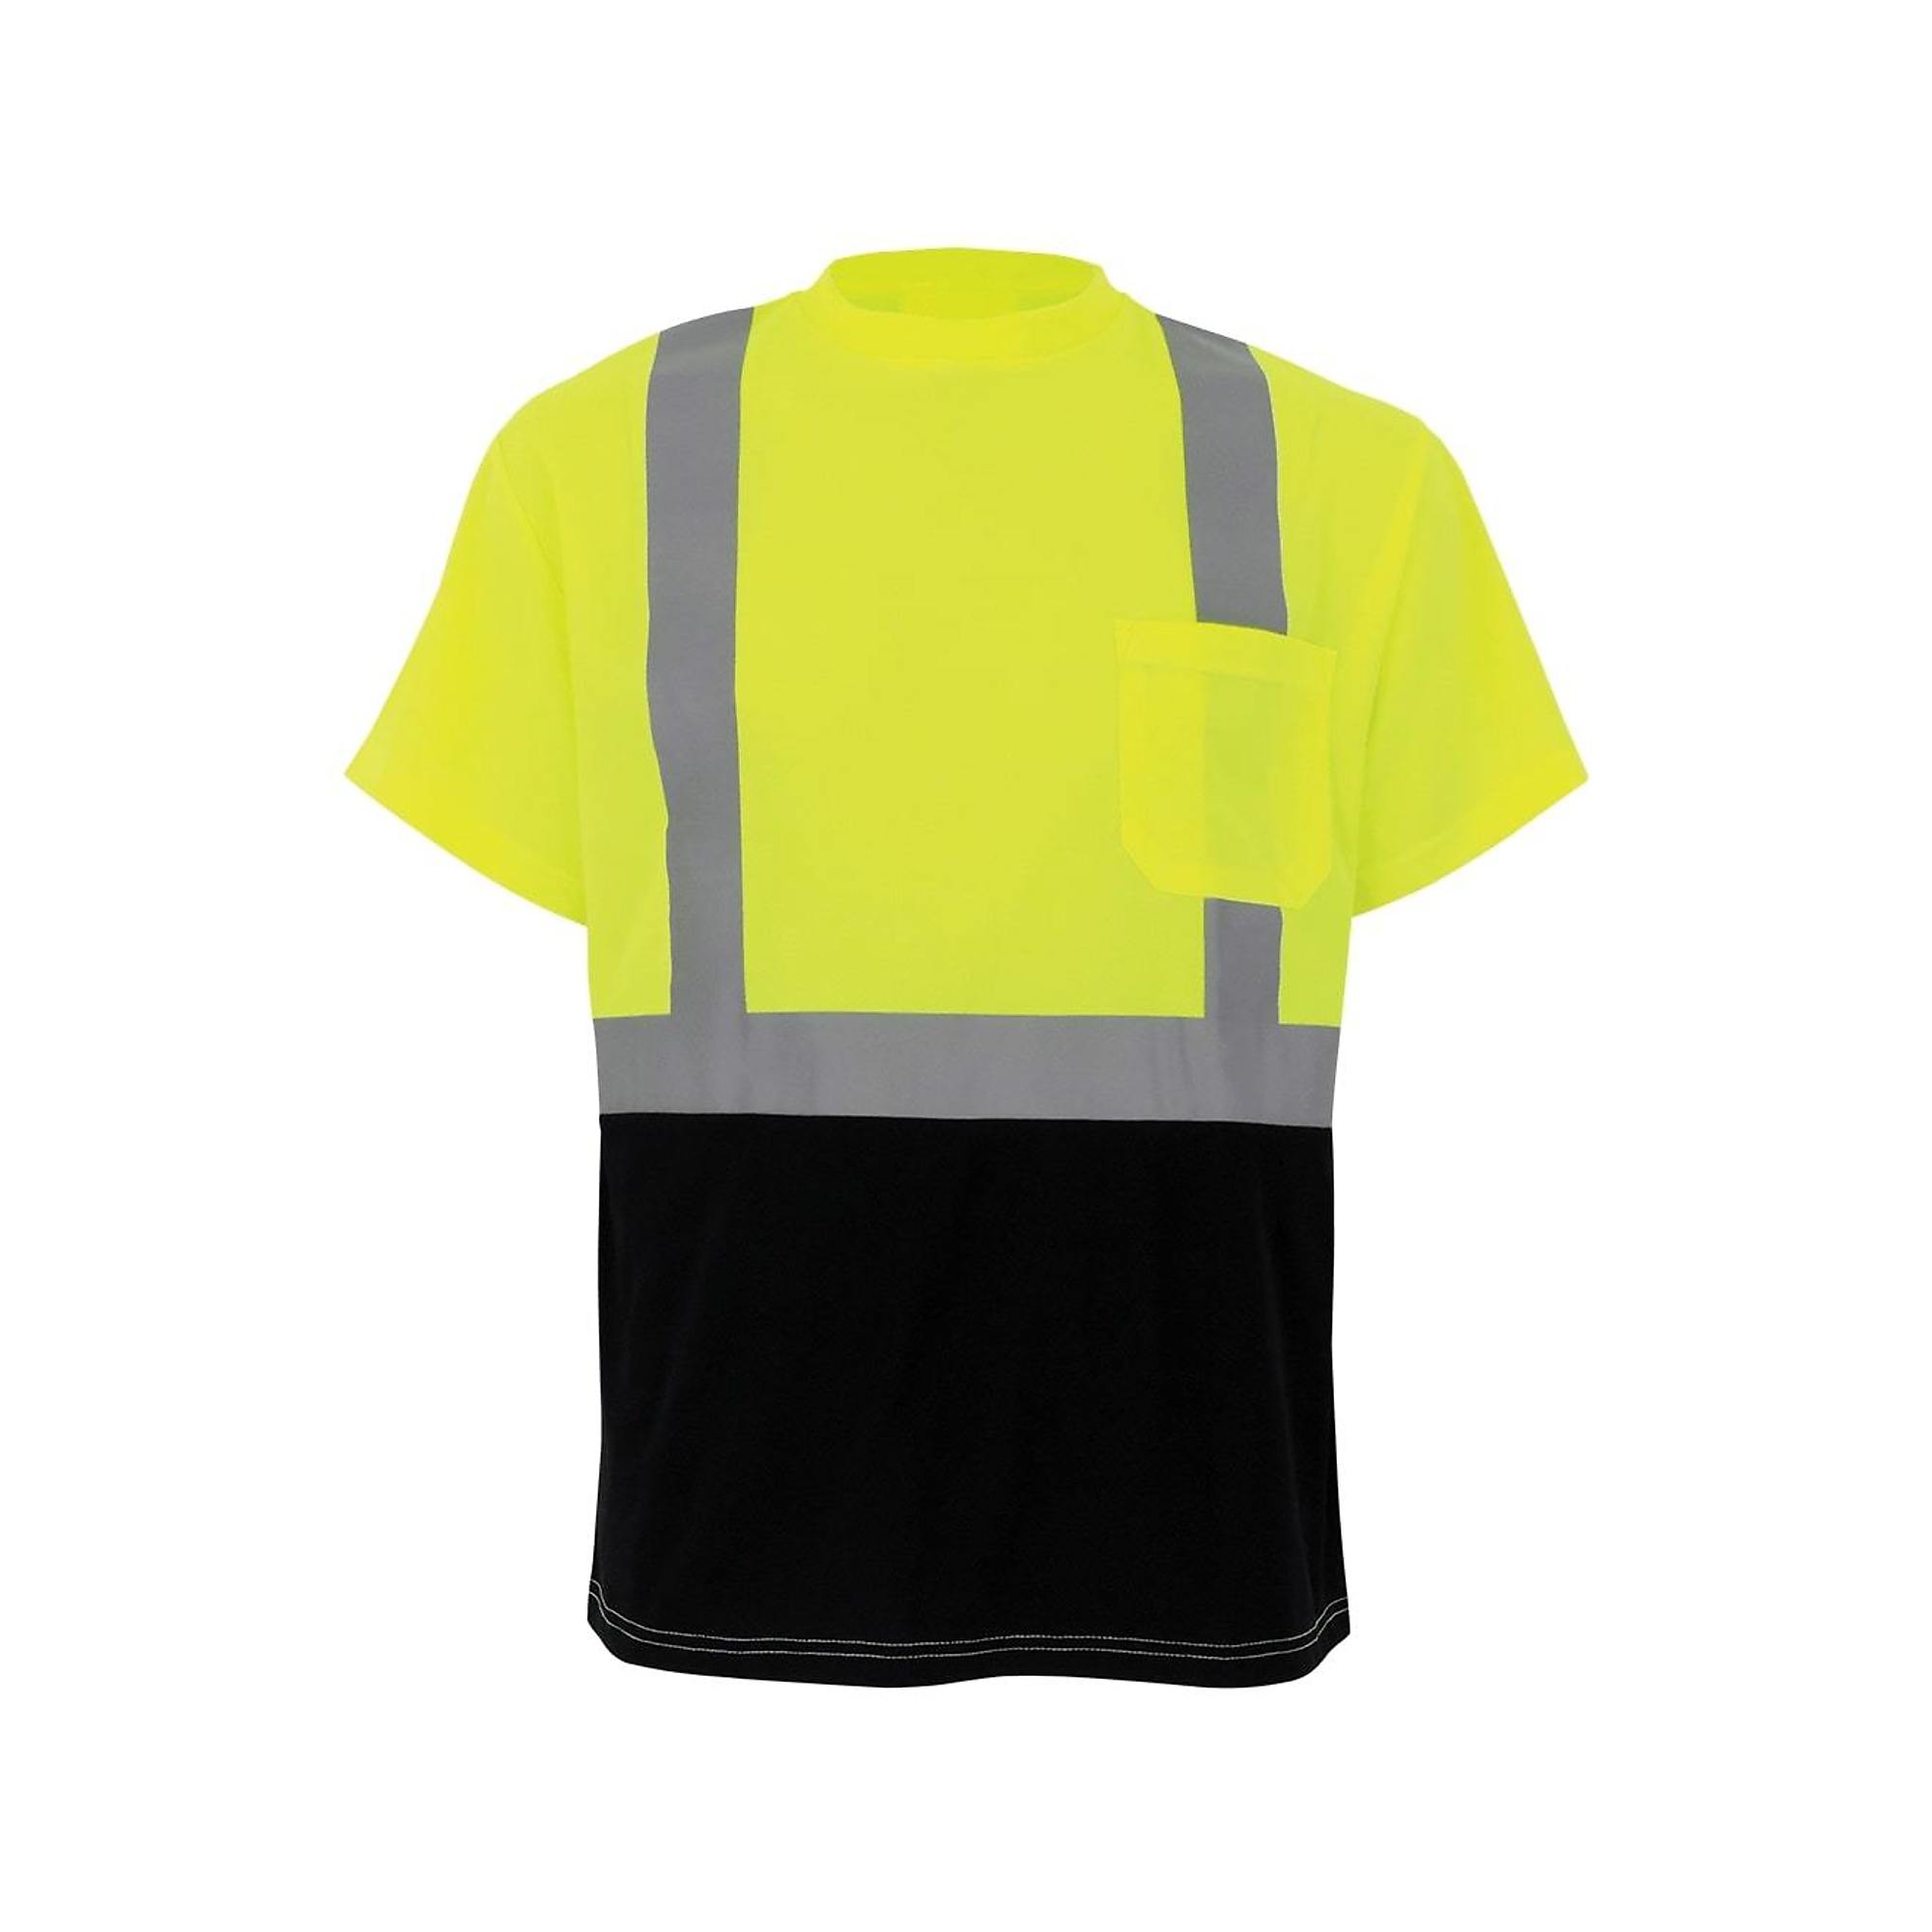 FrogWear, HV Yellow/Green, Class 2 Self-Wicking, Short-Sleeve Shirt, Size S, Model GLO-007B-S